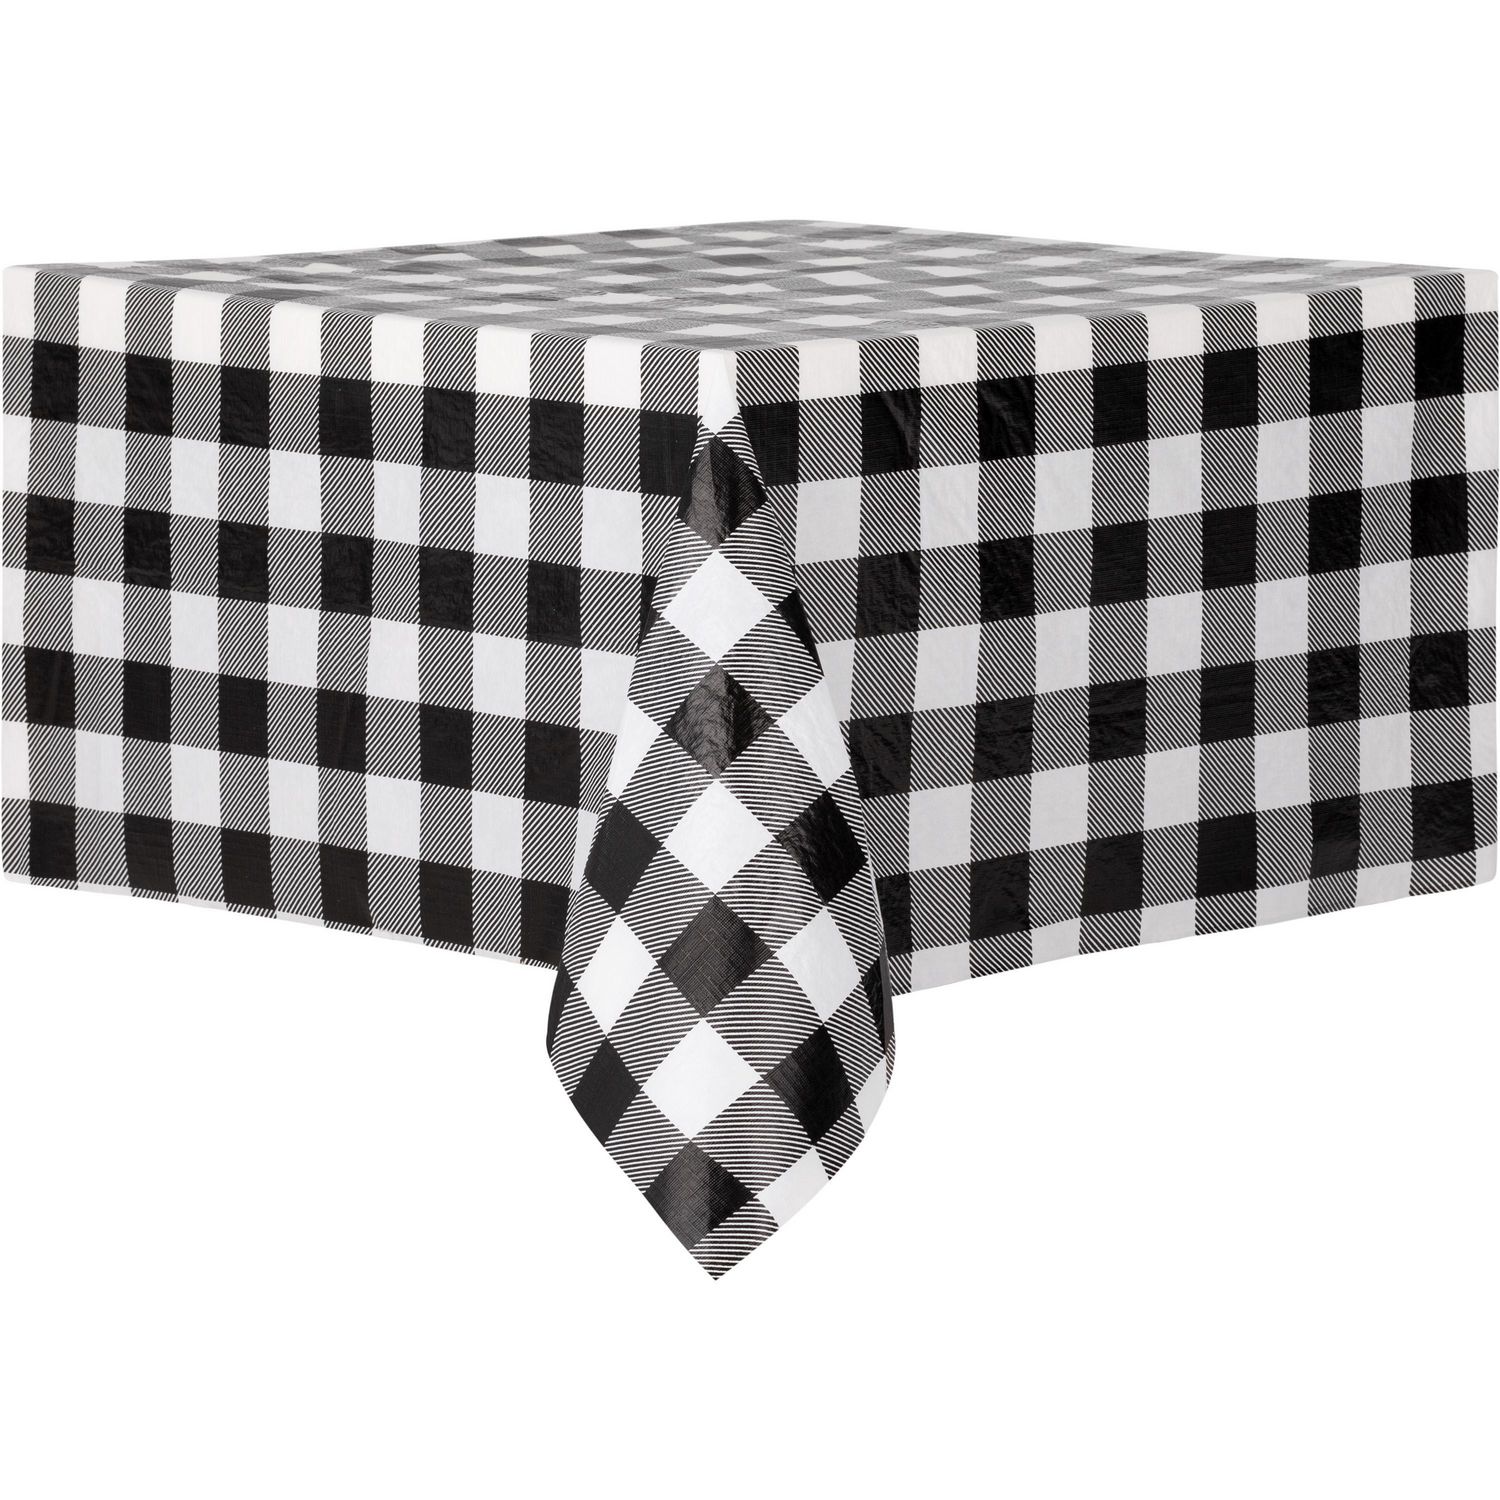 Mainstays Buffalo Plaid PEVA tablecloth | Walmart Canada